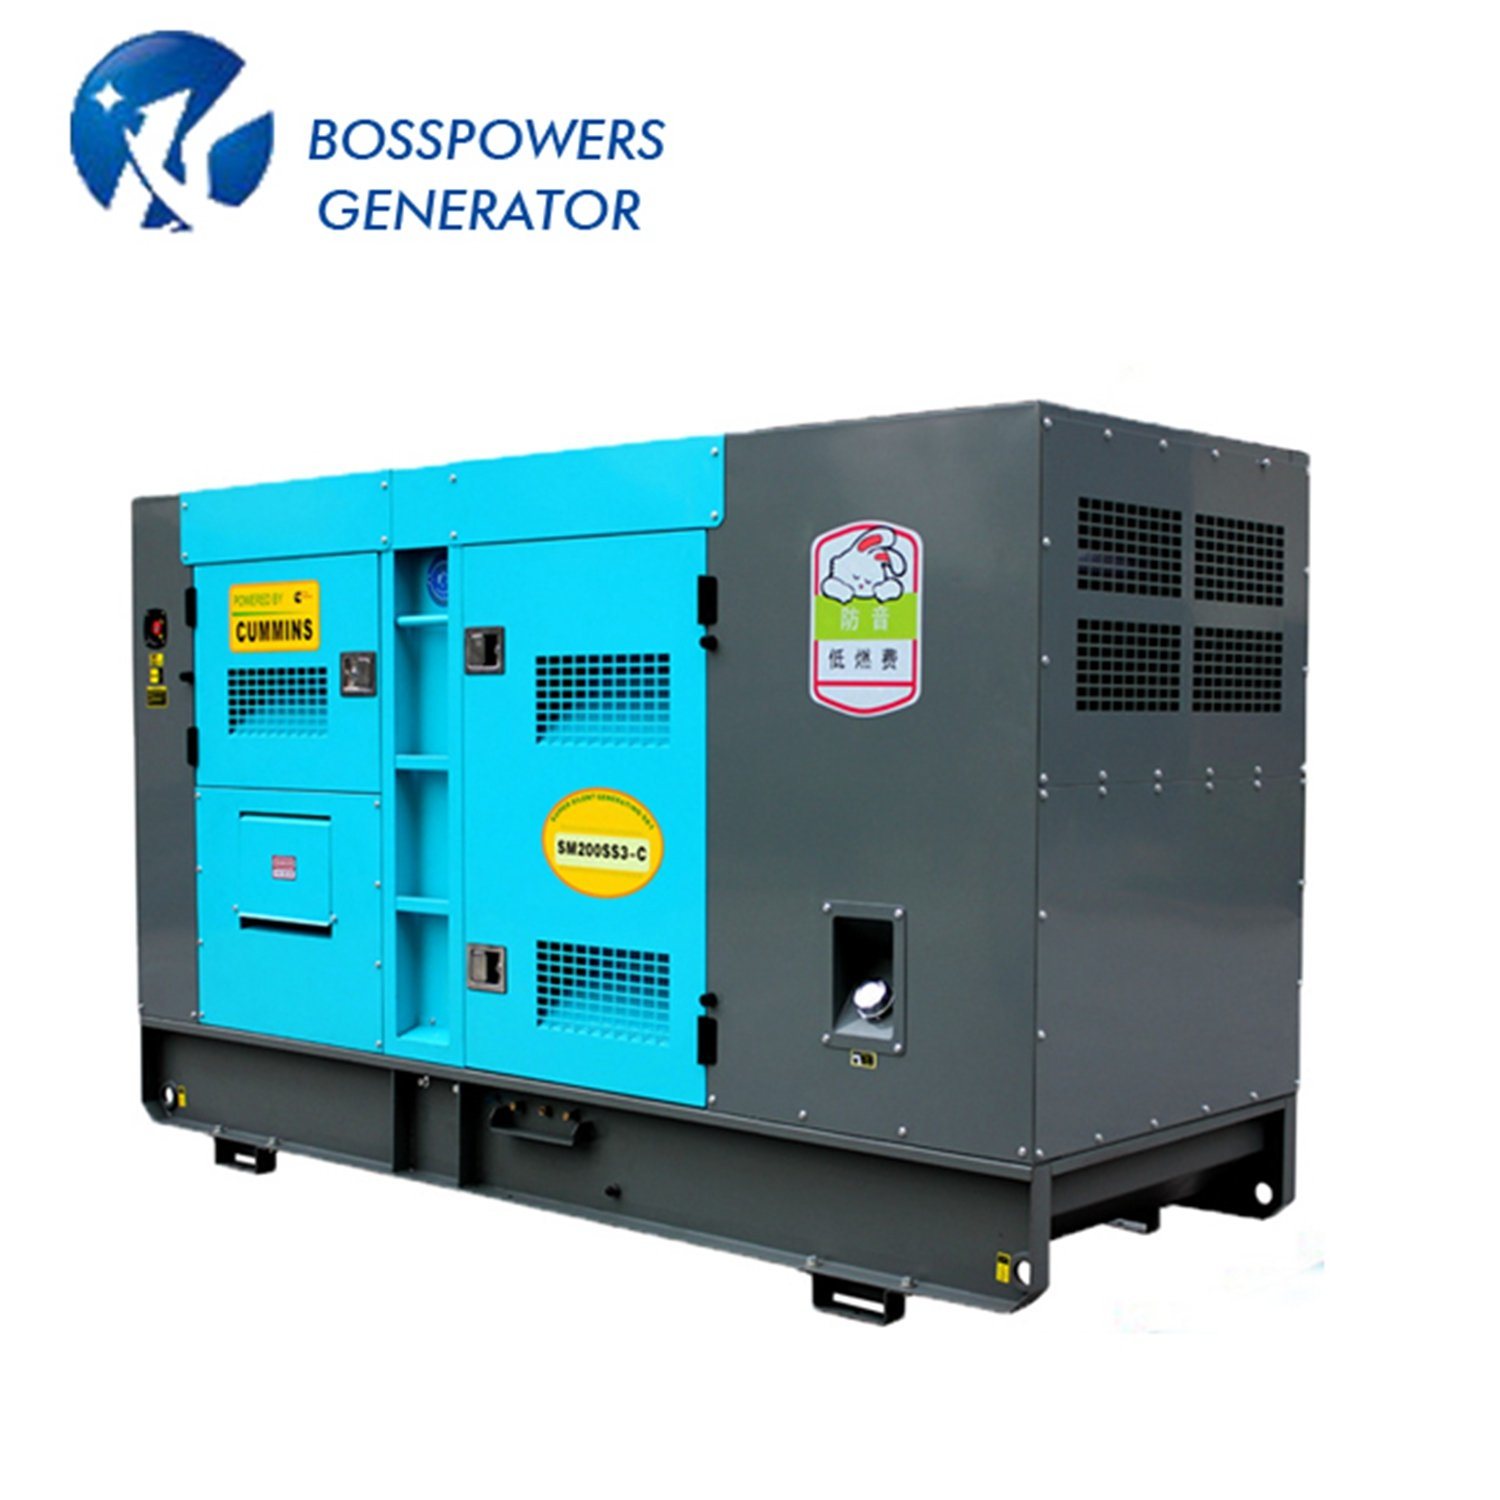 250kw 60Hz Powered by Weichai Soundproof Diesel Generator Canopy Generator